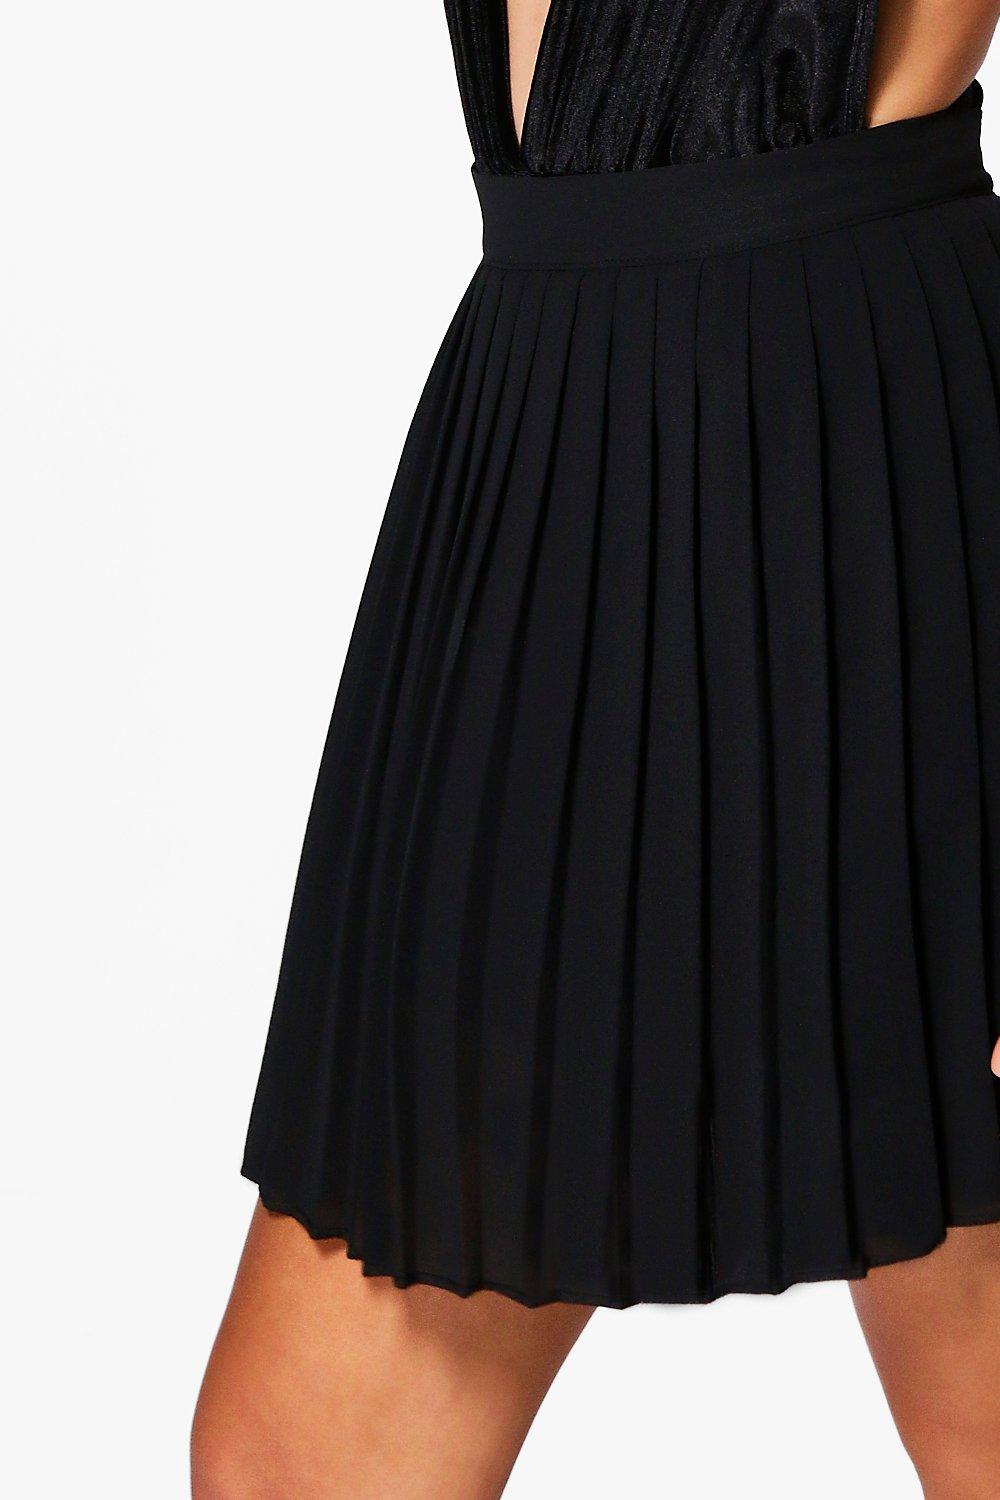 Boohoo Womens Cate Chiffon Pleated Mini Skirt | eBay